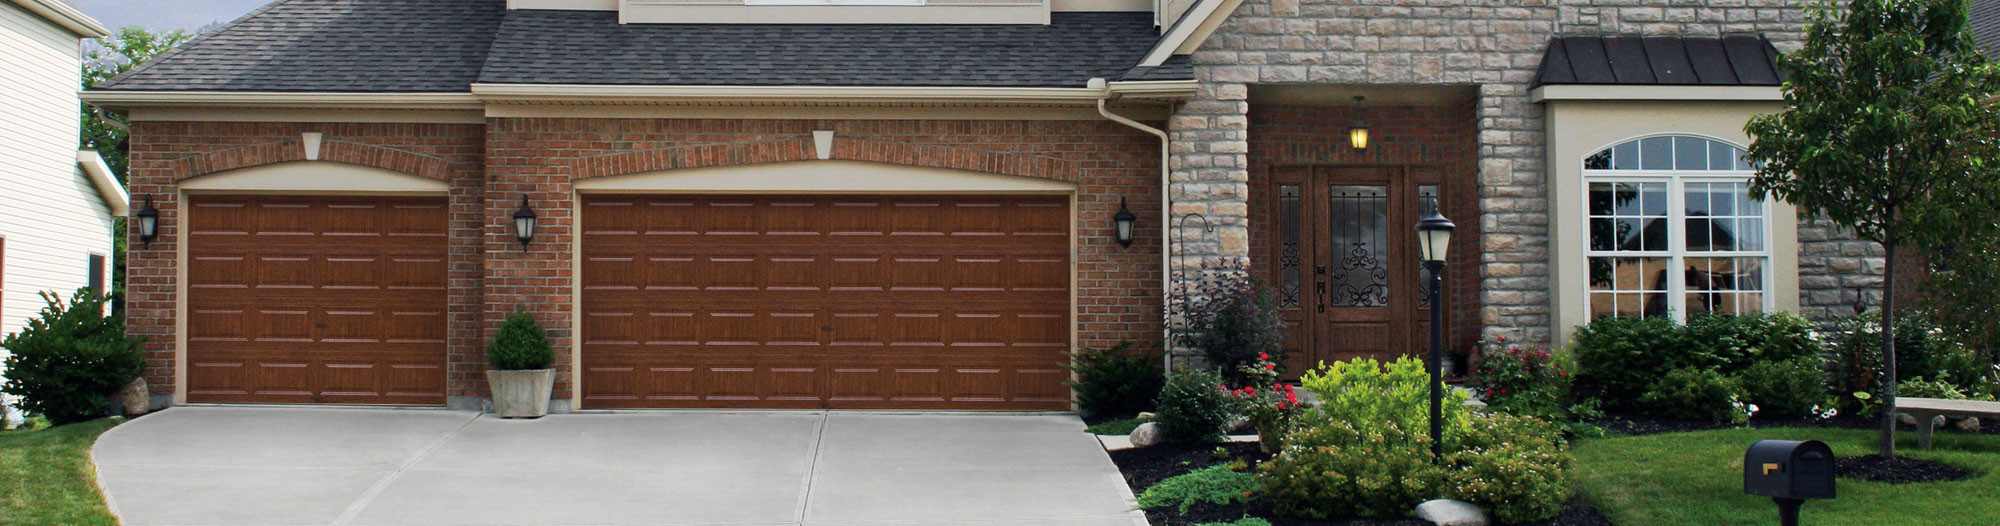 Types Of Garage Doors
 Garage Door Types We Sell The Best And Service The Rest